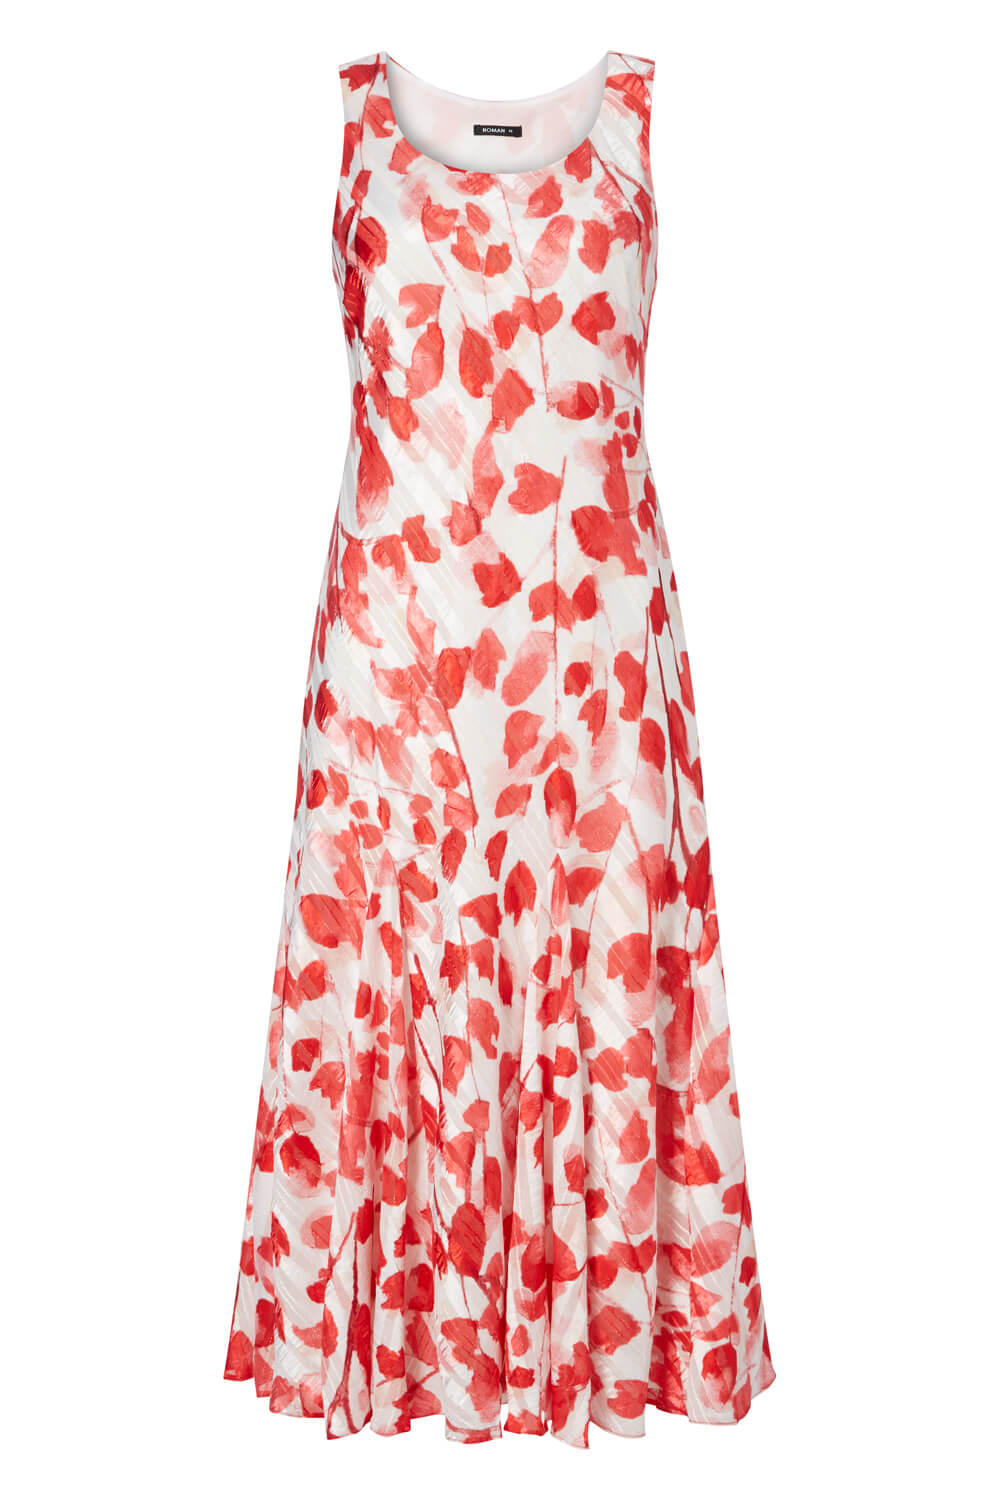 Red Poppy Print Bias Cut Dress, Image 4 of 4